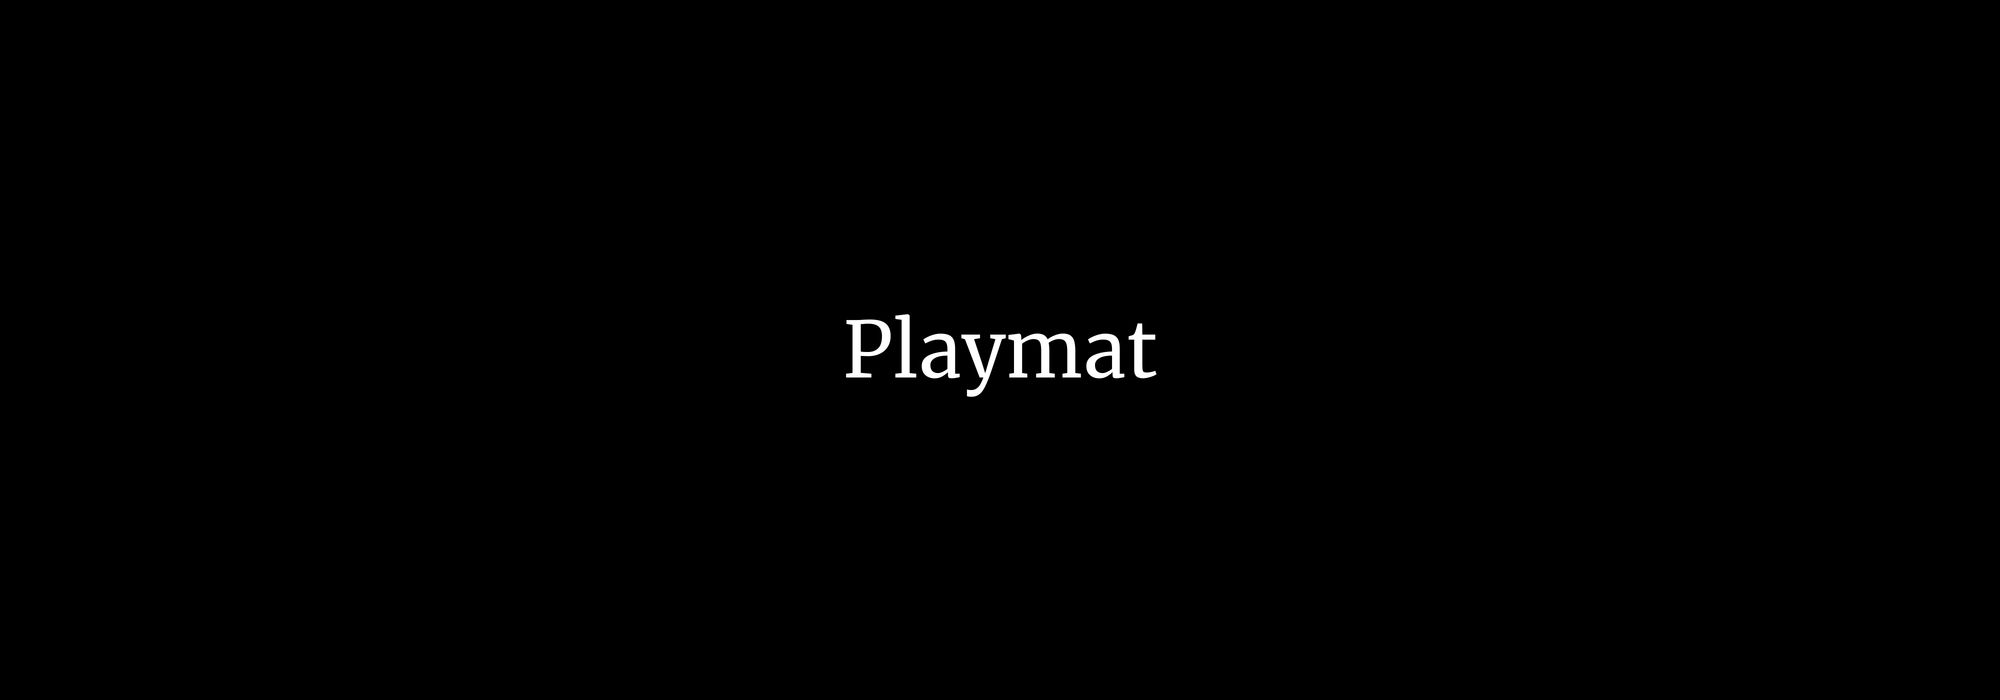 Playmat